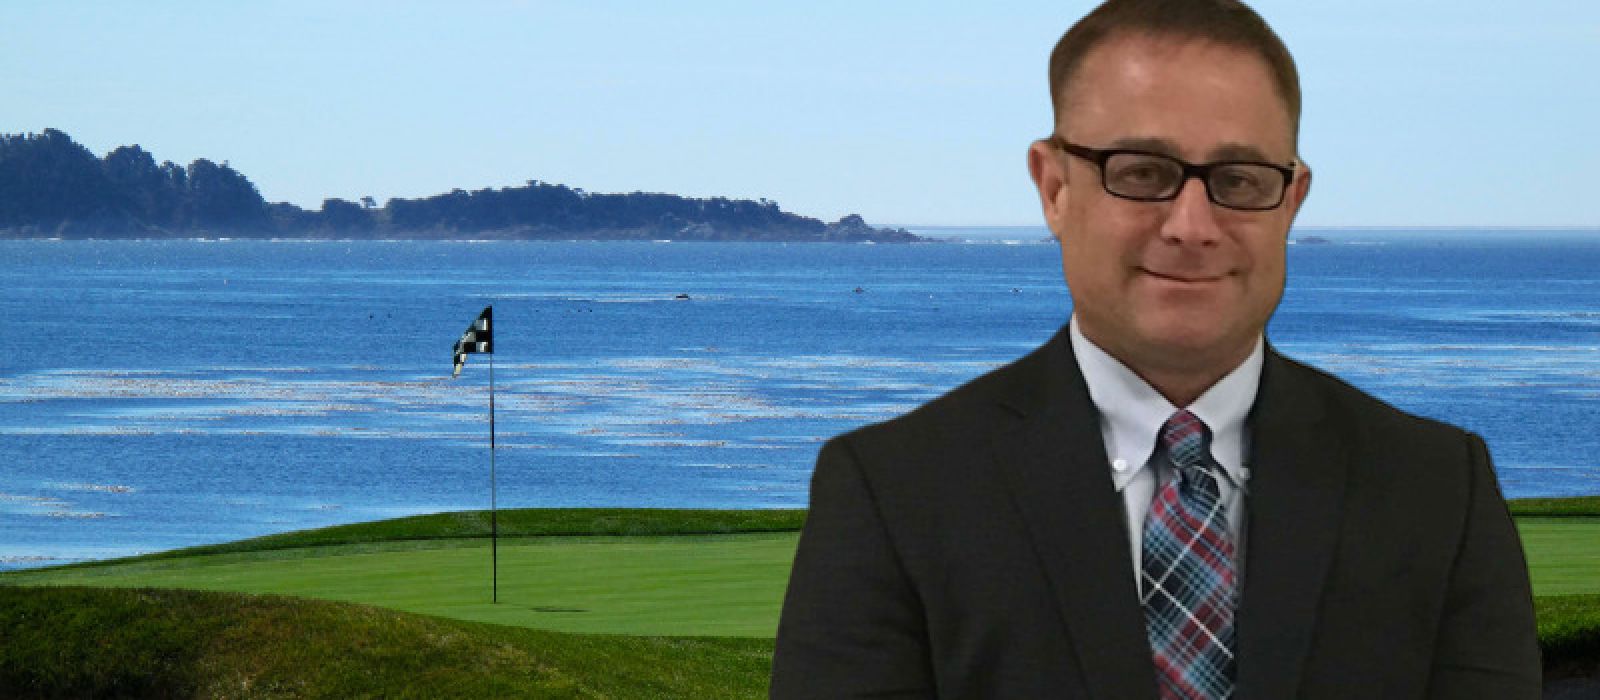 Trump Golf Course Accident Attorneys | Sue for Negligence